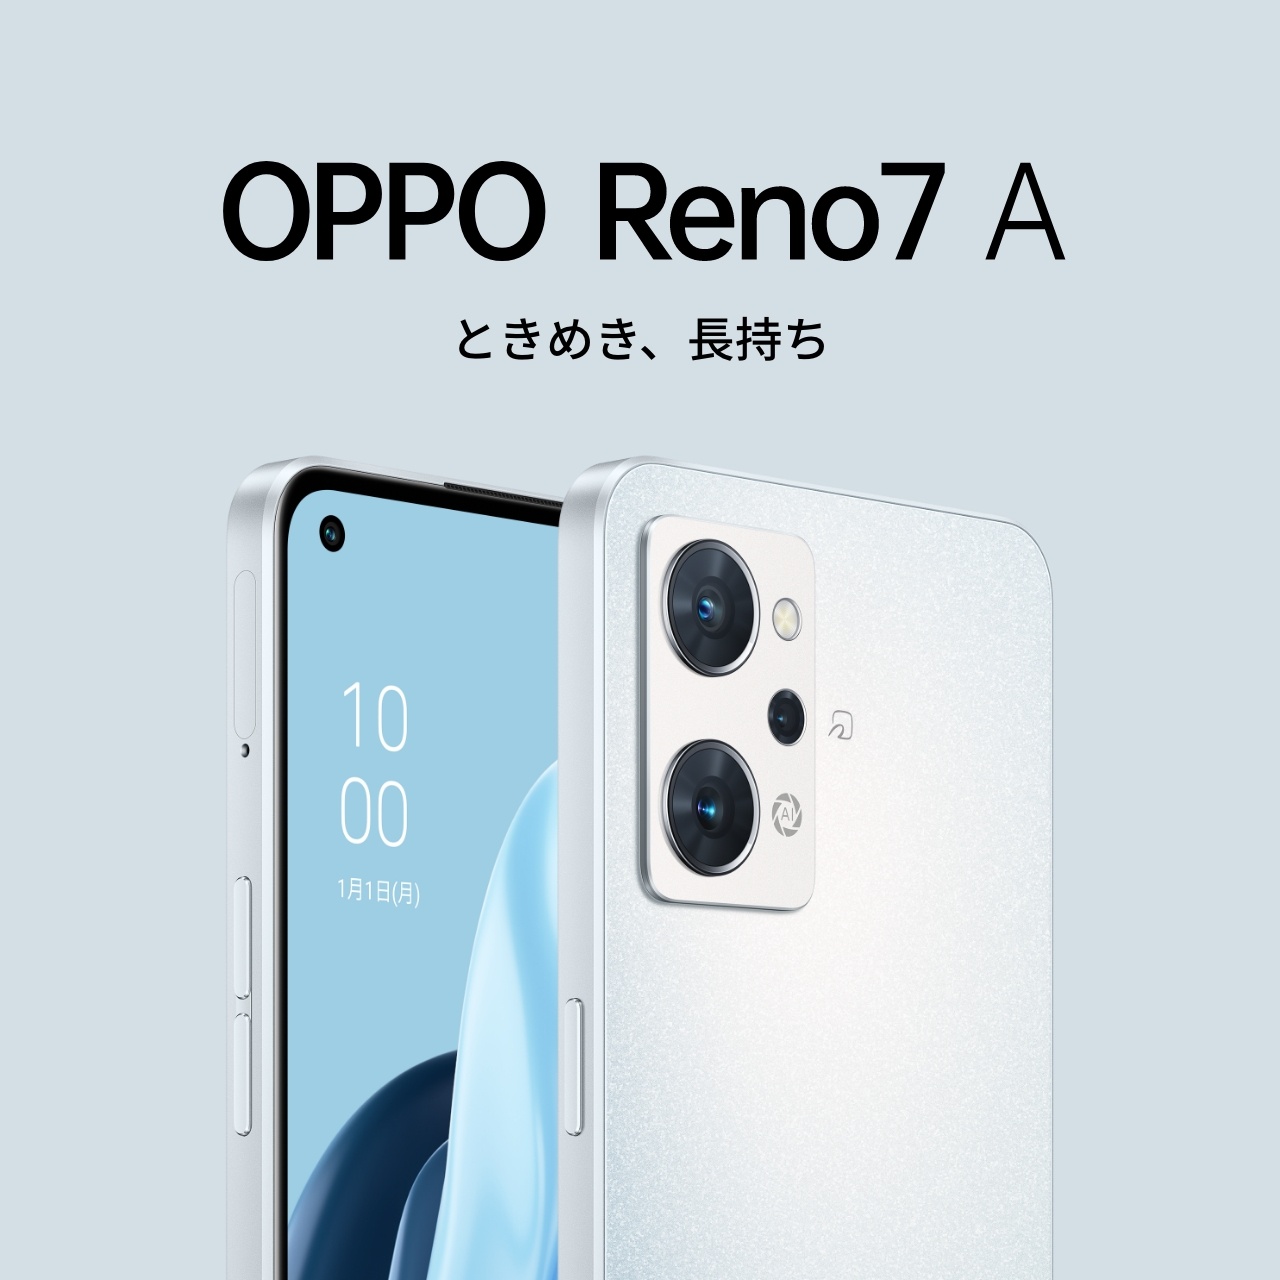 OPPO Reno7 A【SIMFREE】 | スマートフォン | OPPO公式オンラインショップ